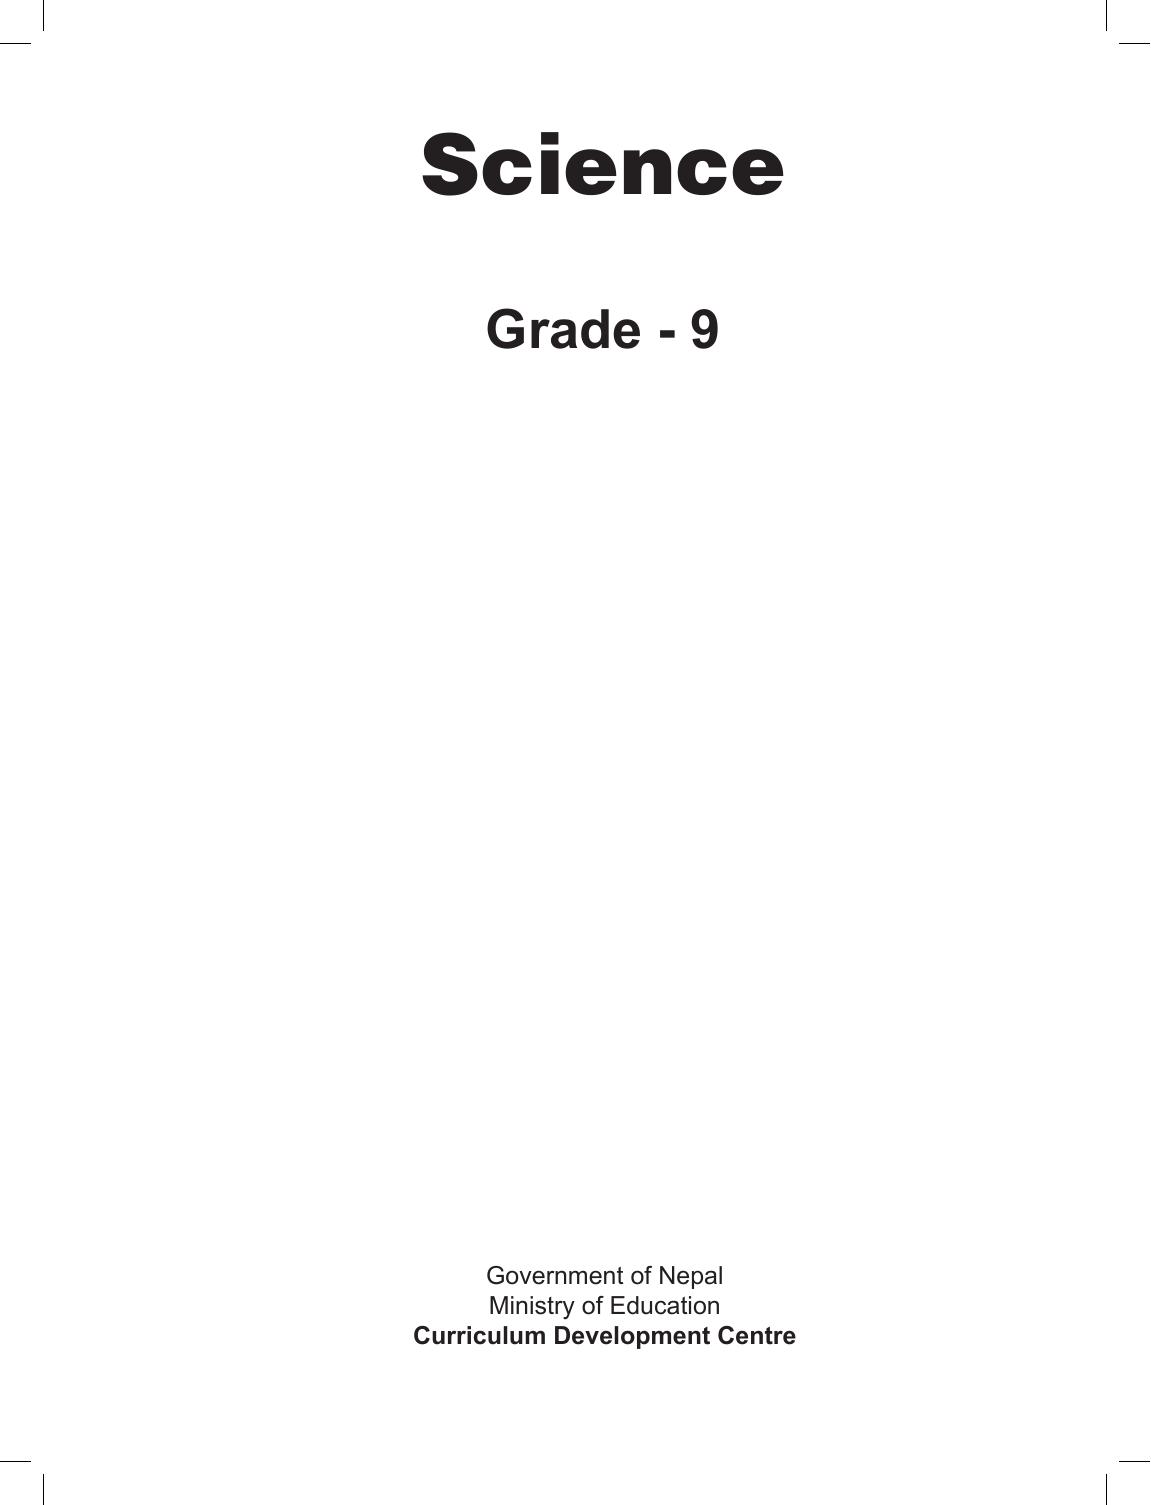 CDC 2017 - Science Grade 9